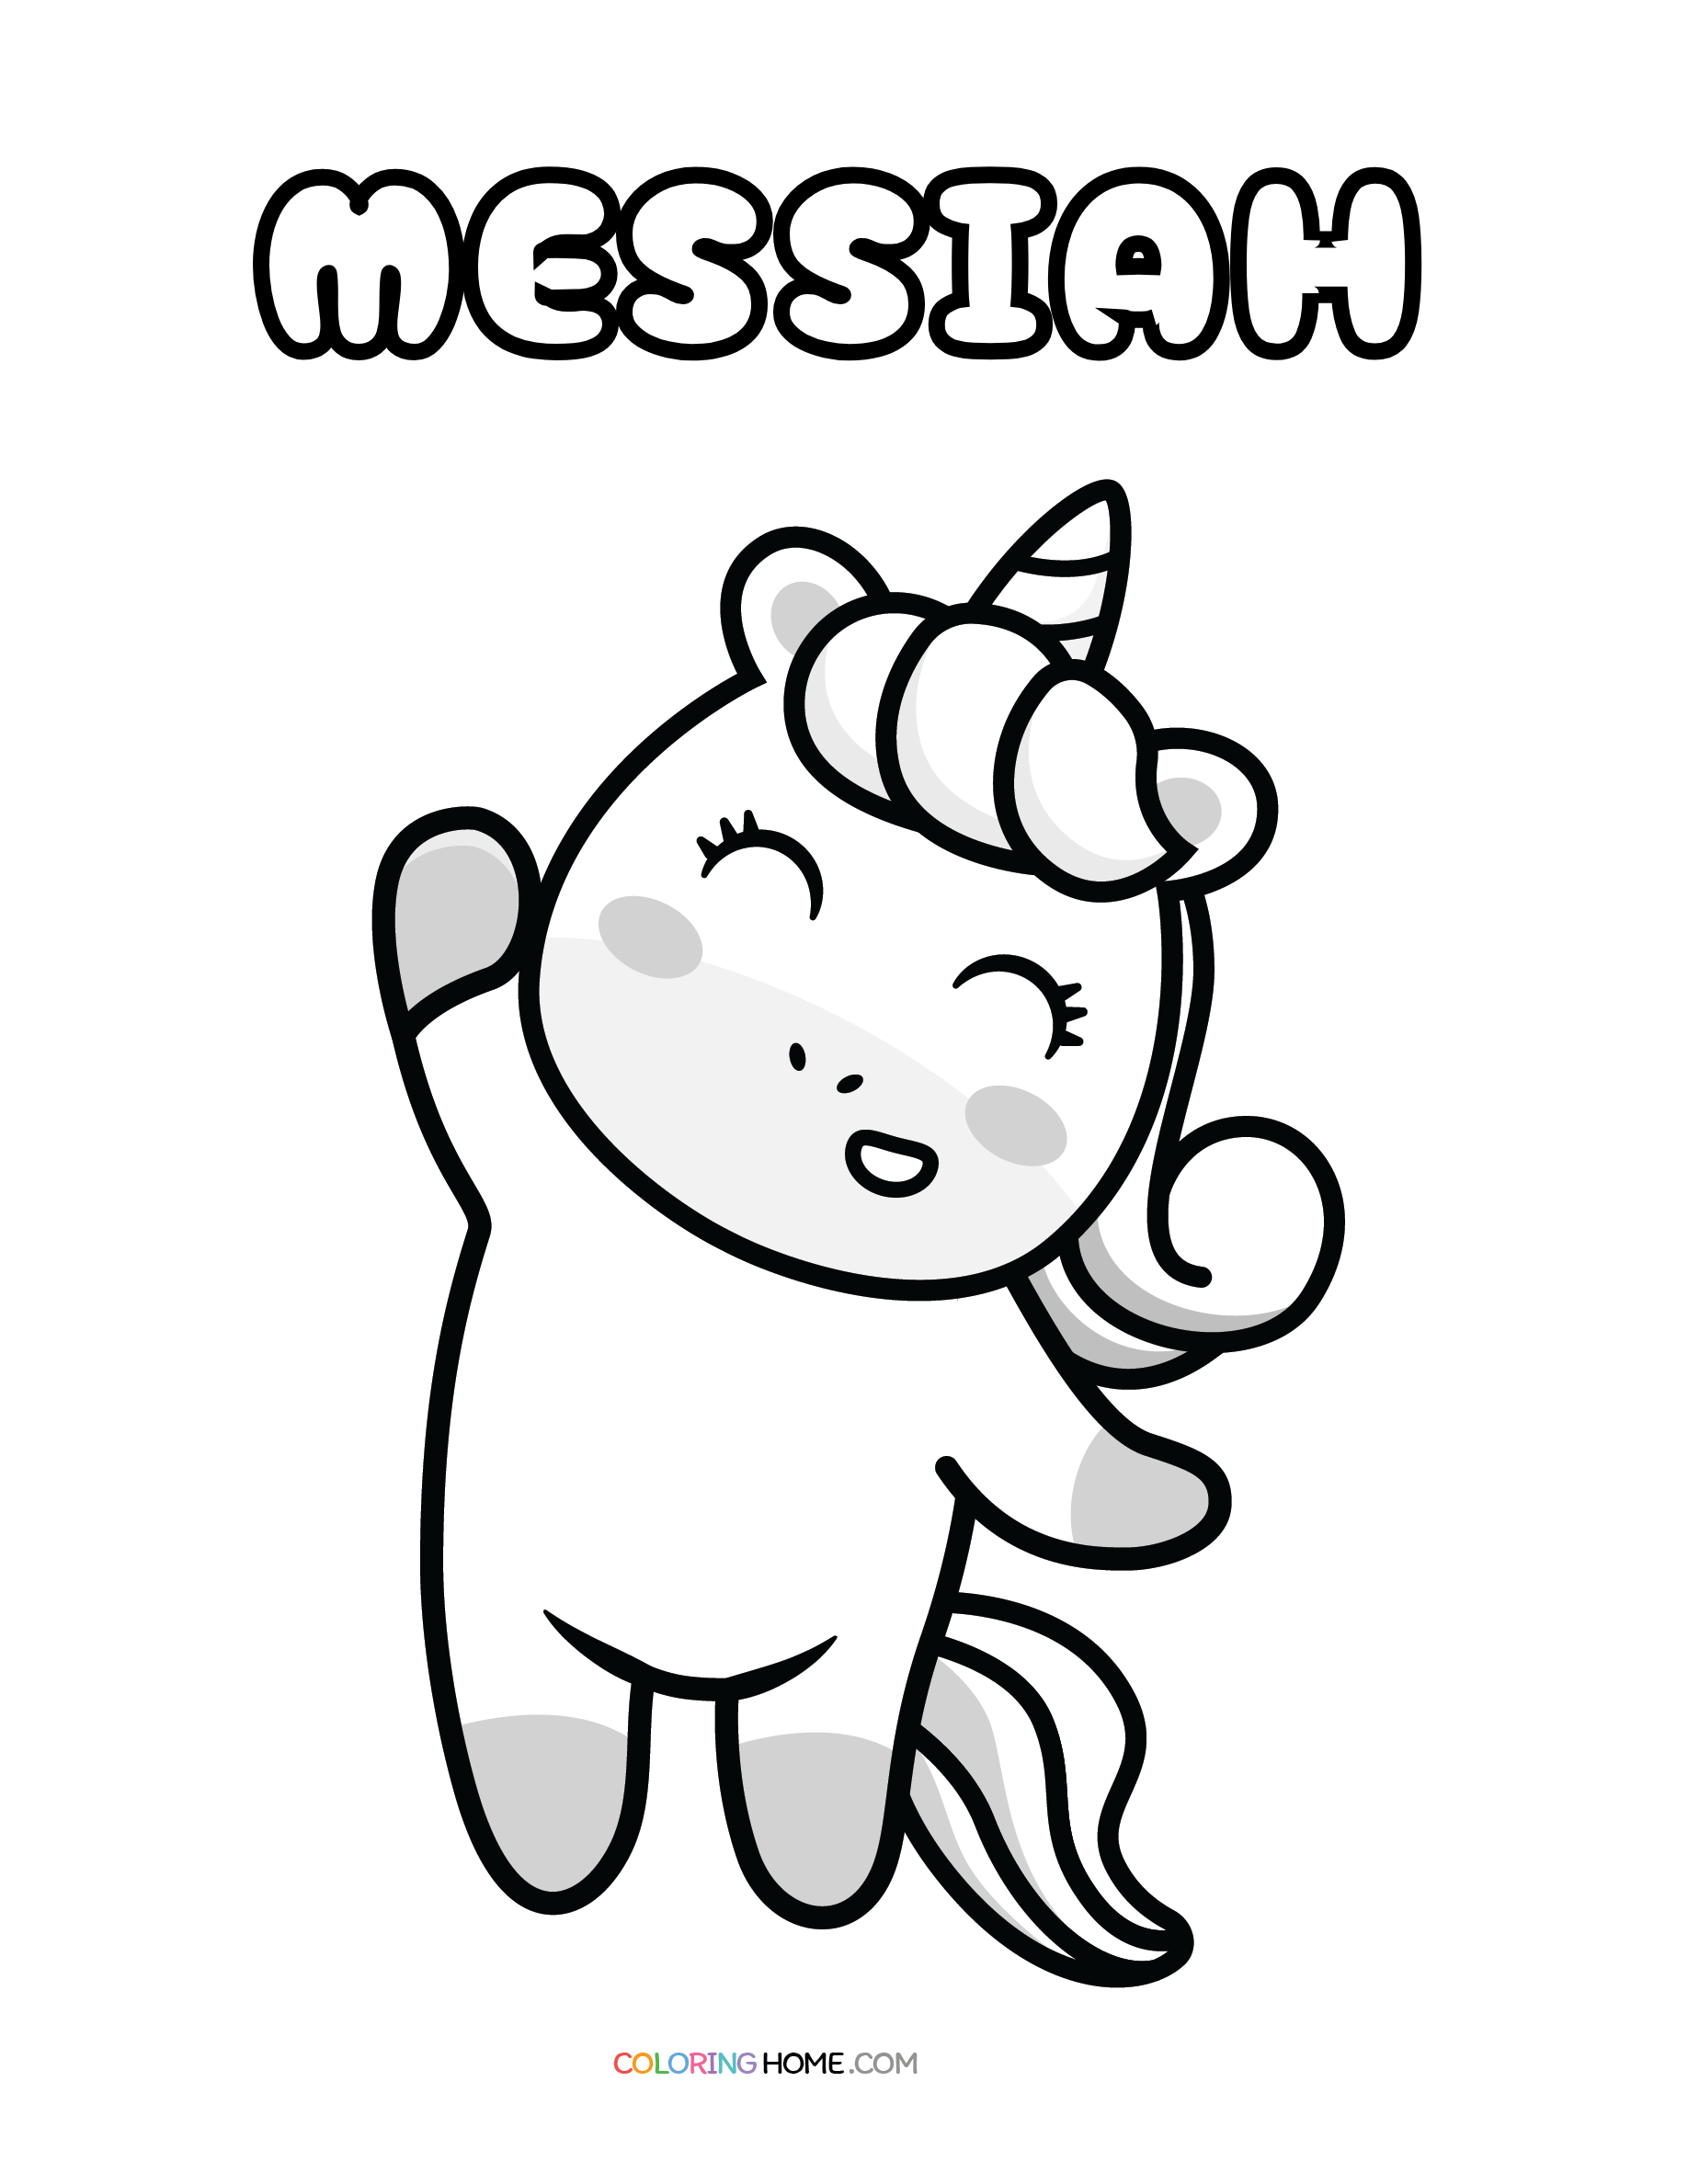 Messiah unicorn coloring page